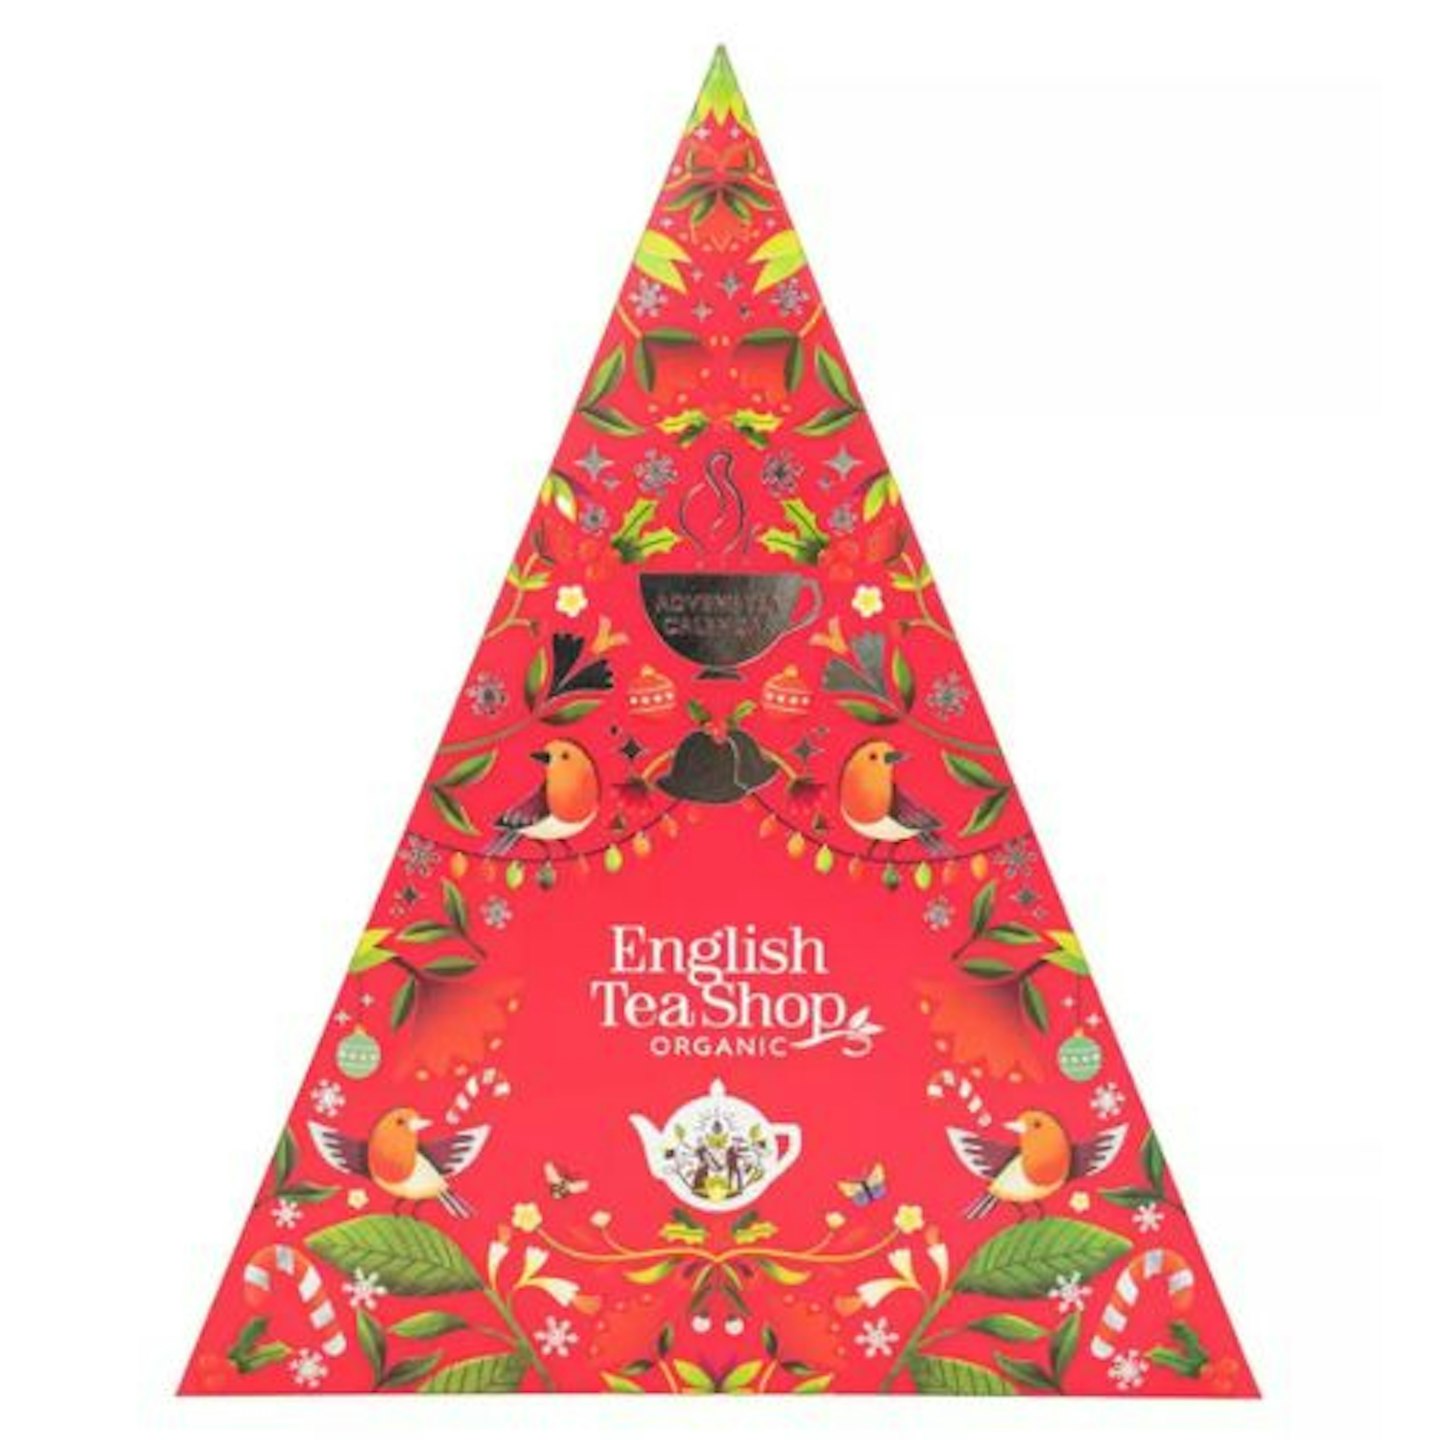 English Tea Shop Pyramid Advent Calendar